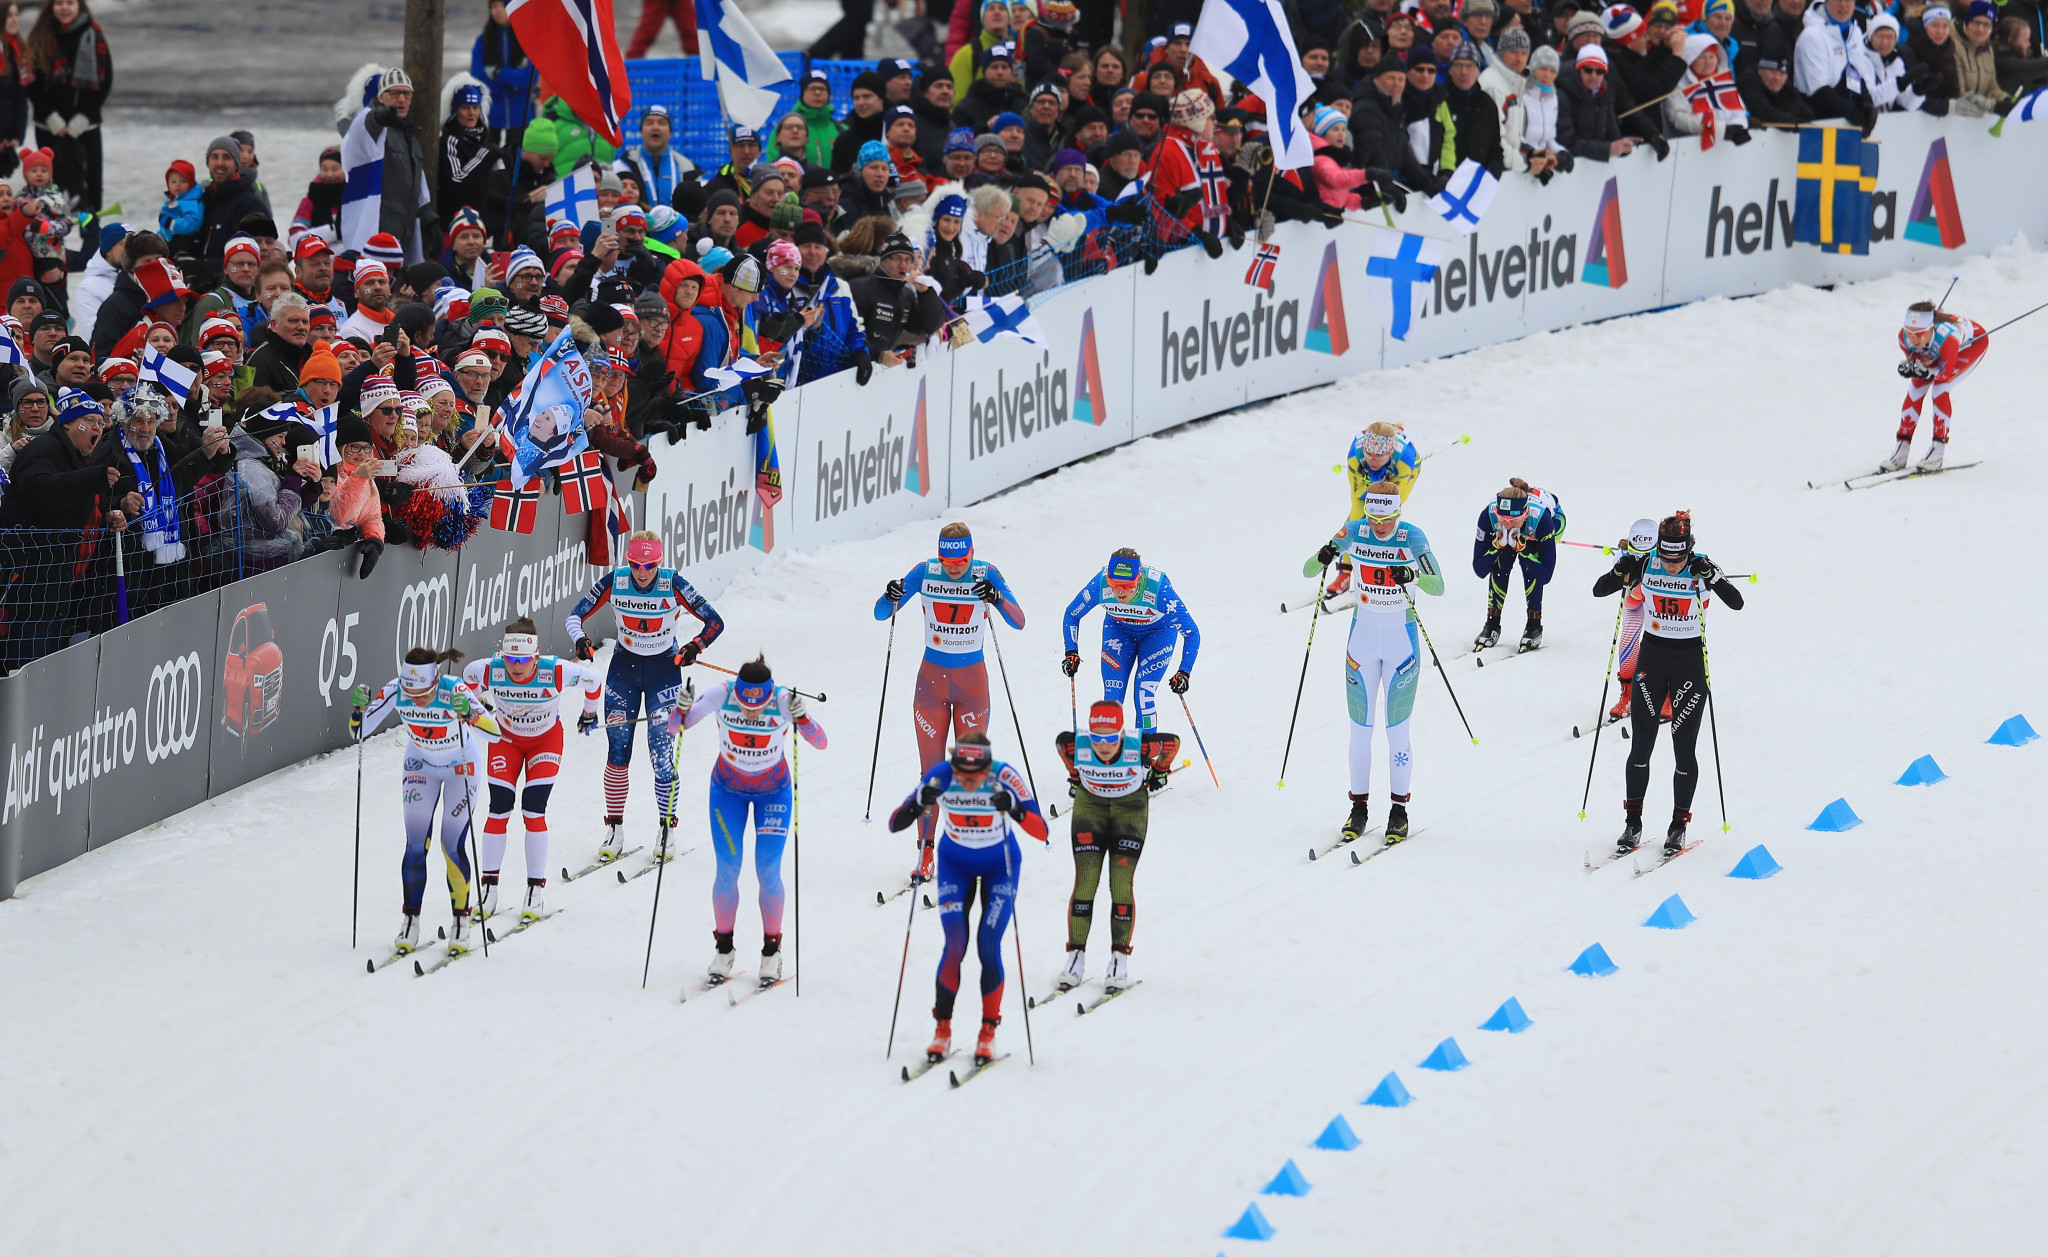 Viessmann Group named main sponsor for 2019 and 2022 Nordic World Ski Championships